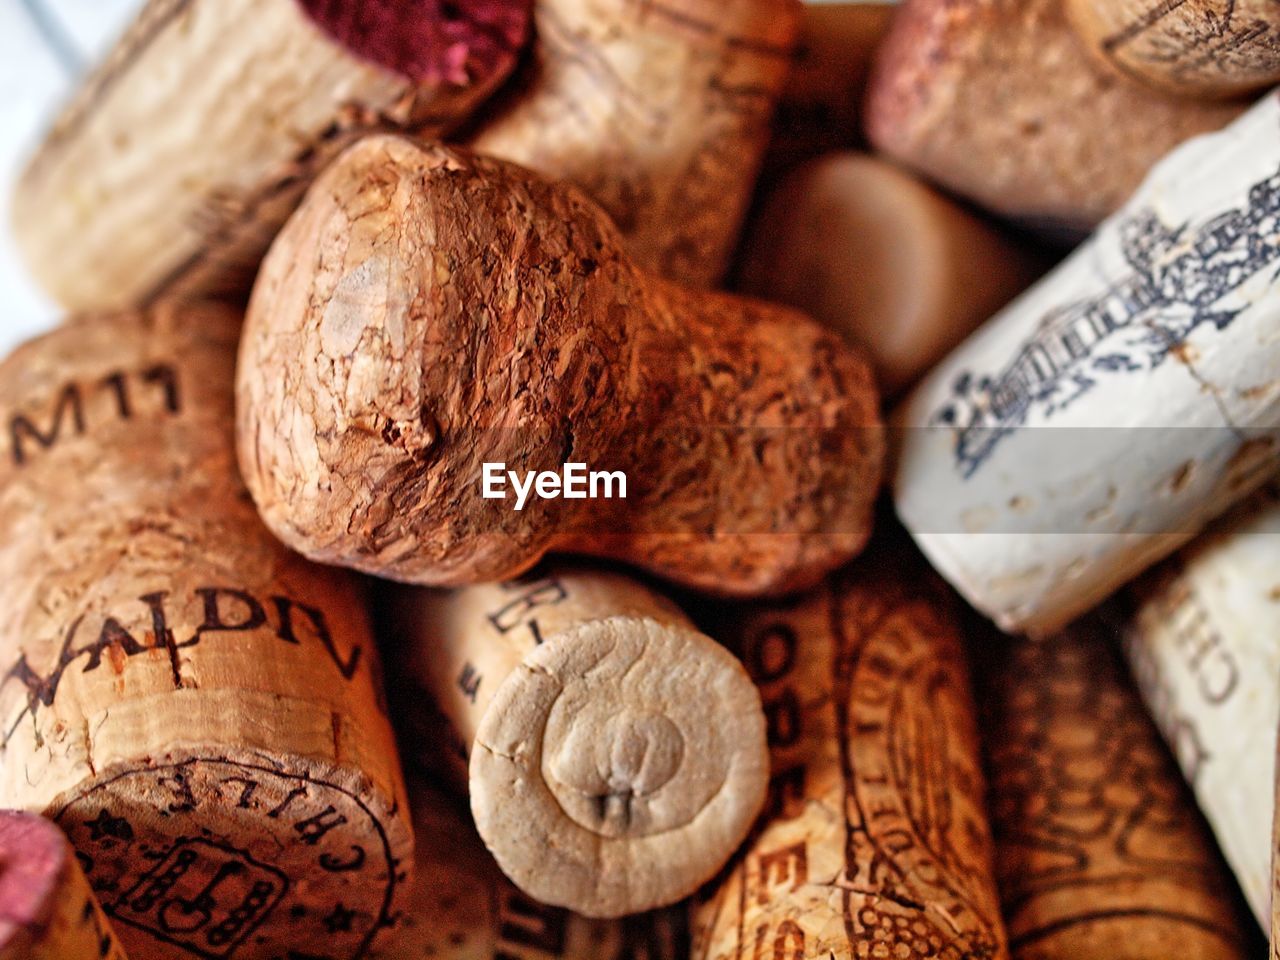 Detail shot of wine corks